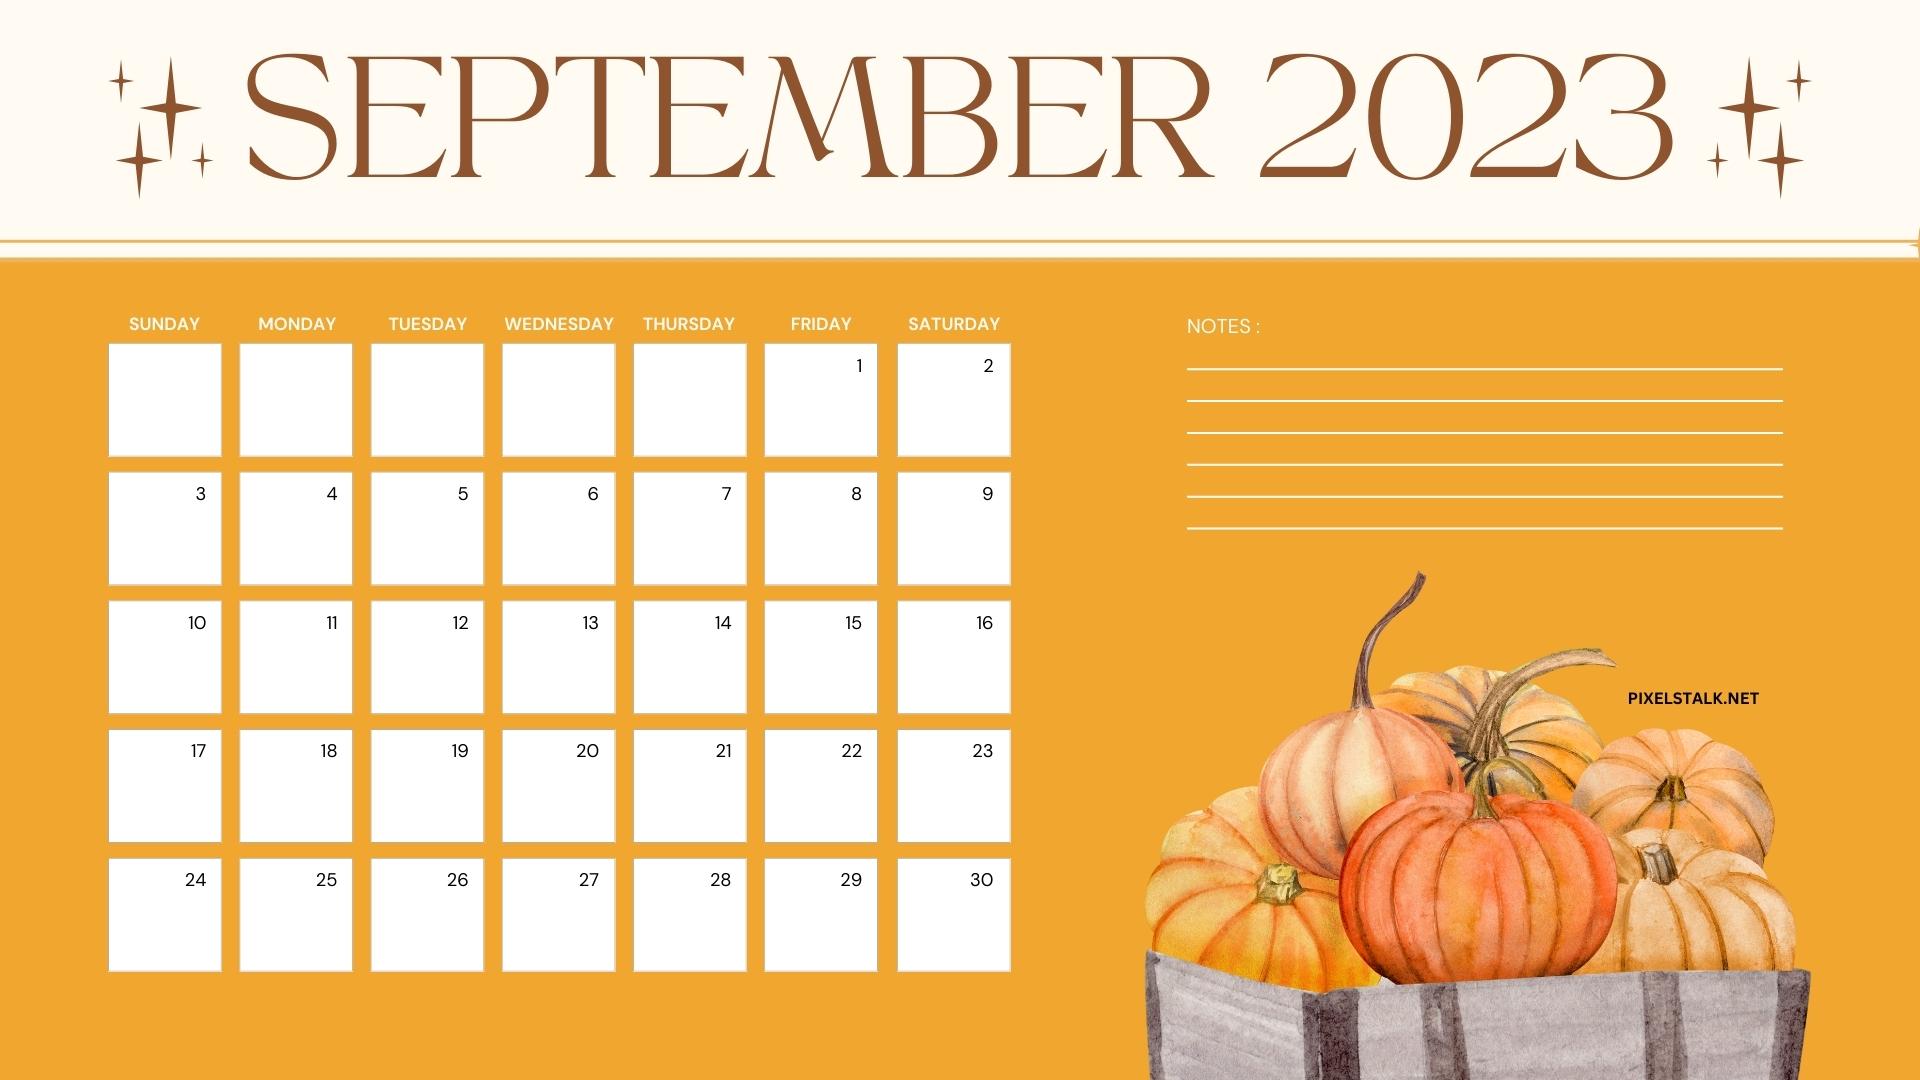 September 2023 Calendar Backgrounds for Desktop